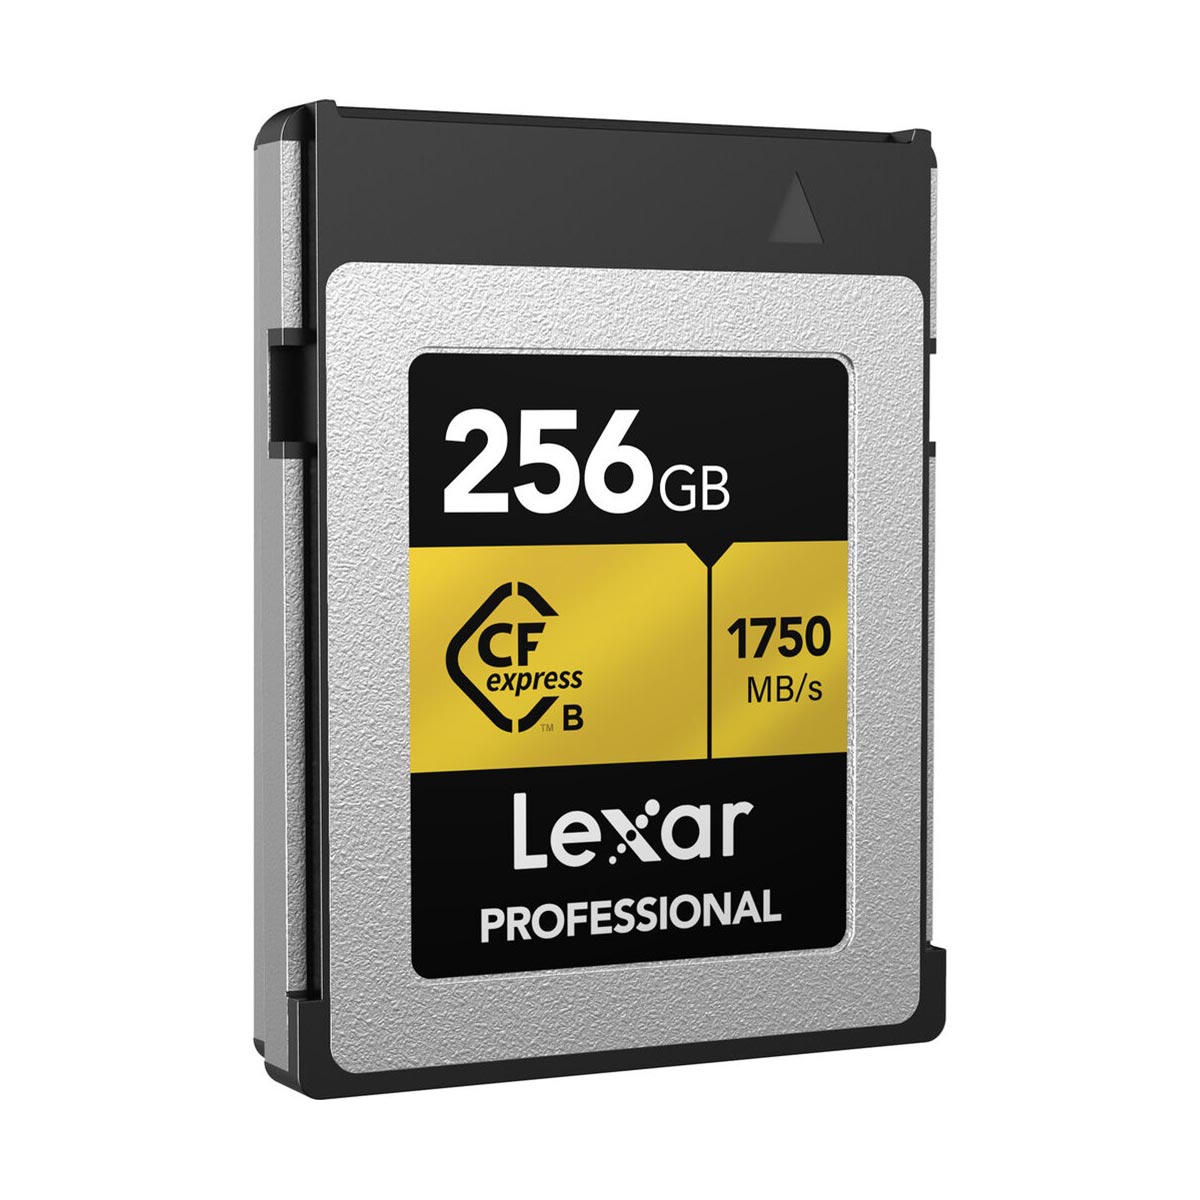 Lexar 256GB Professional CFexpress Type-B Memory Card (Gold Series)